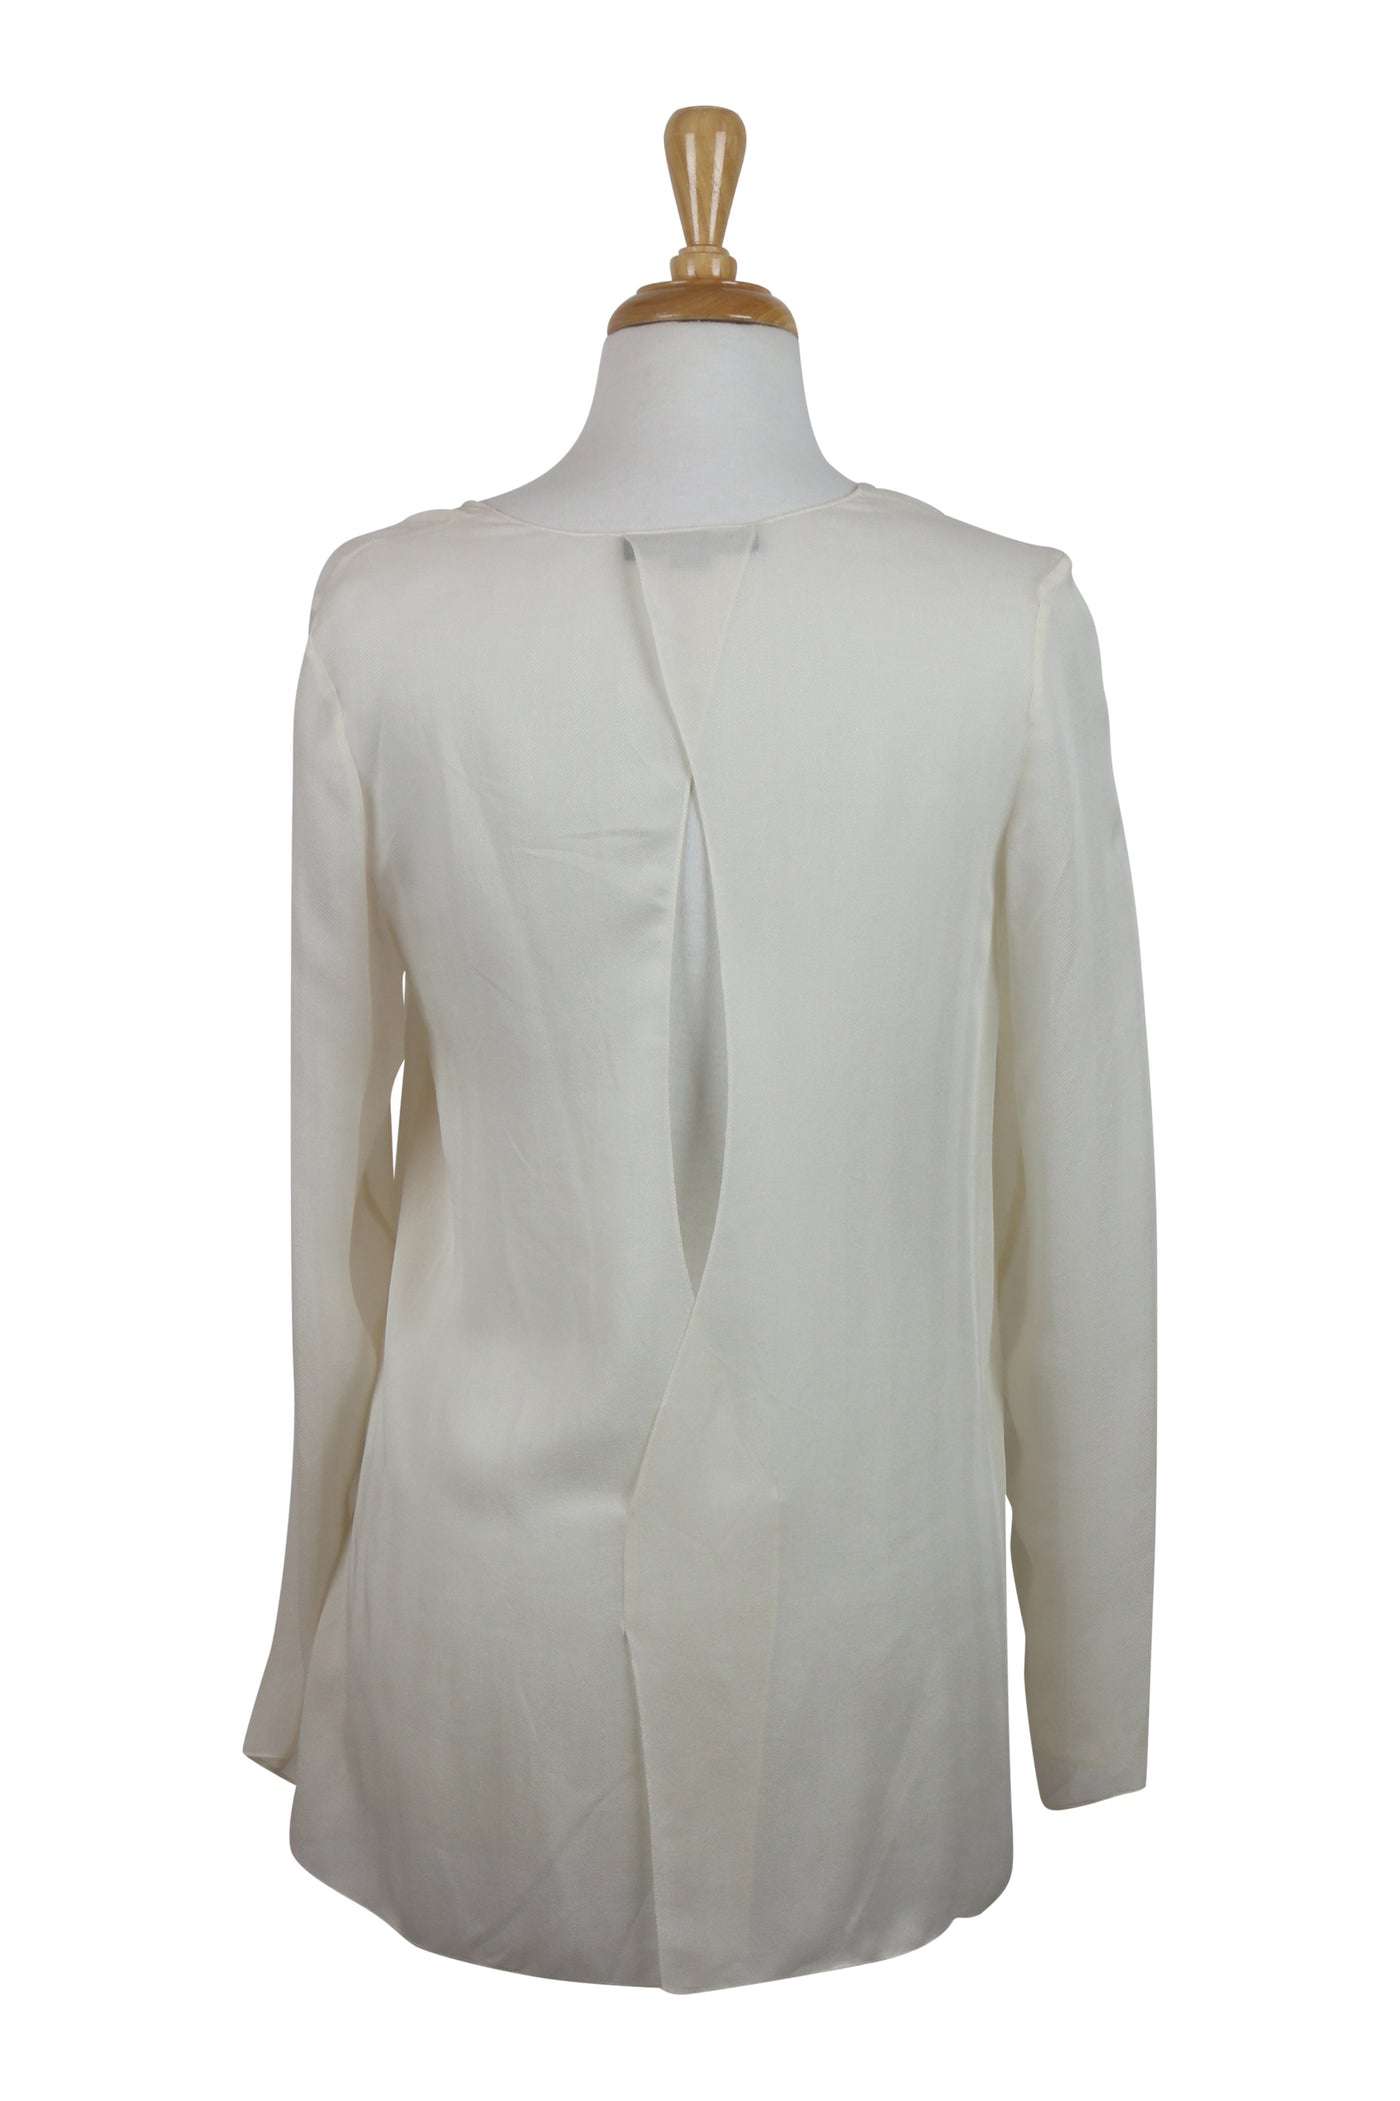 Cream silk cross over blouse